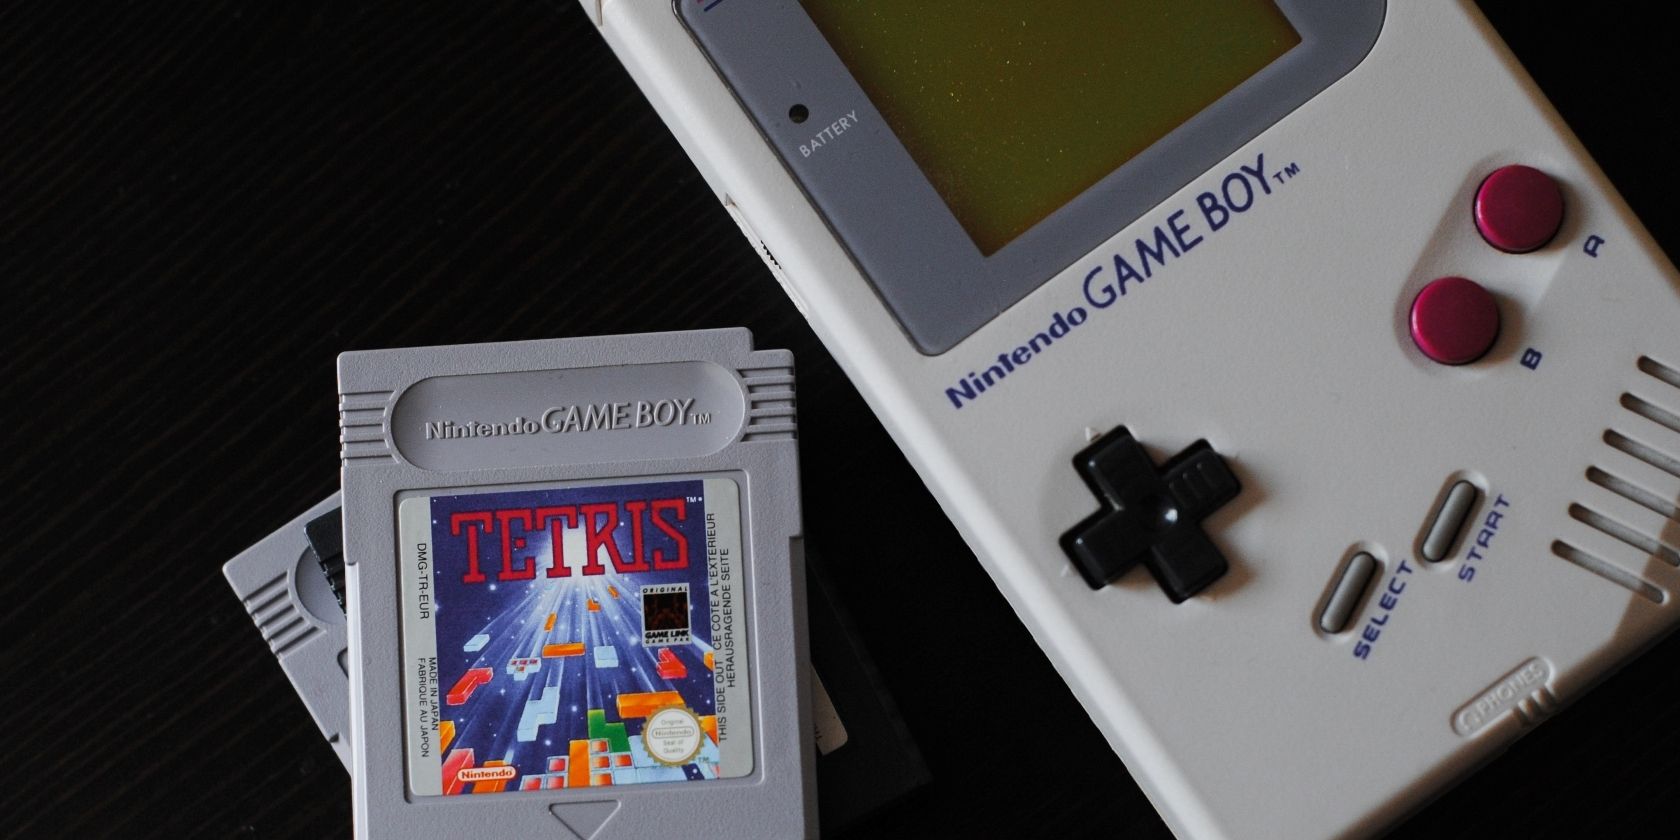 A photograph of an original Game Boy console next to a cartridge for Tetris 